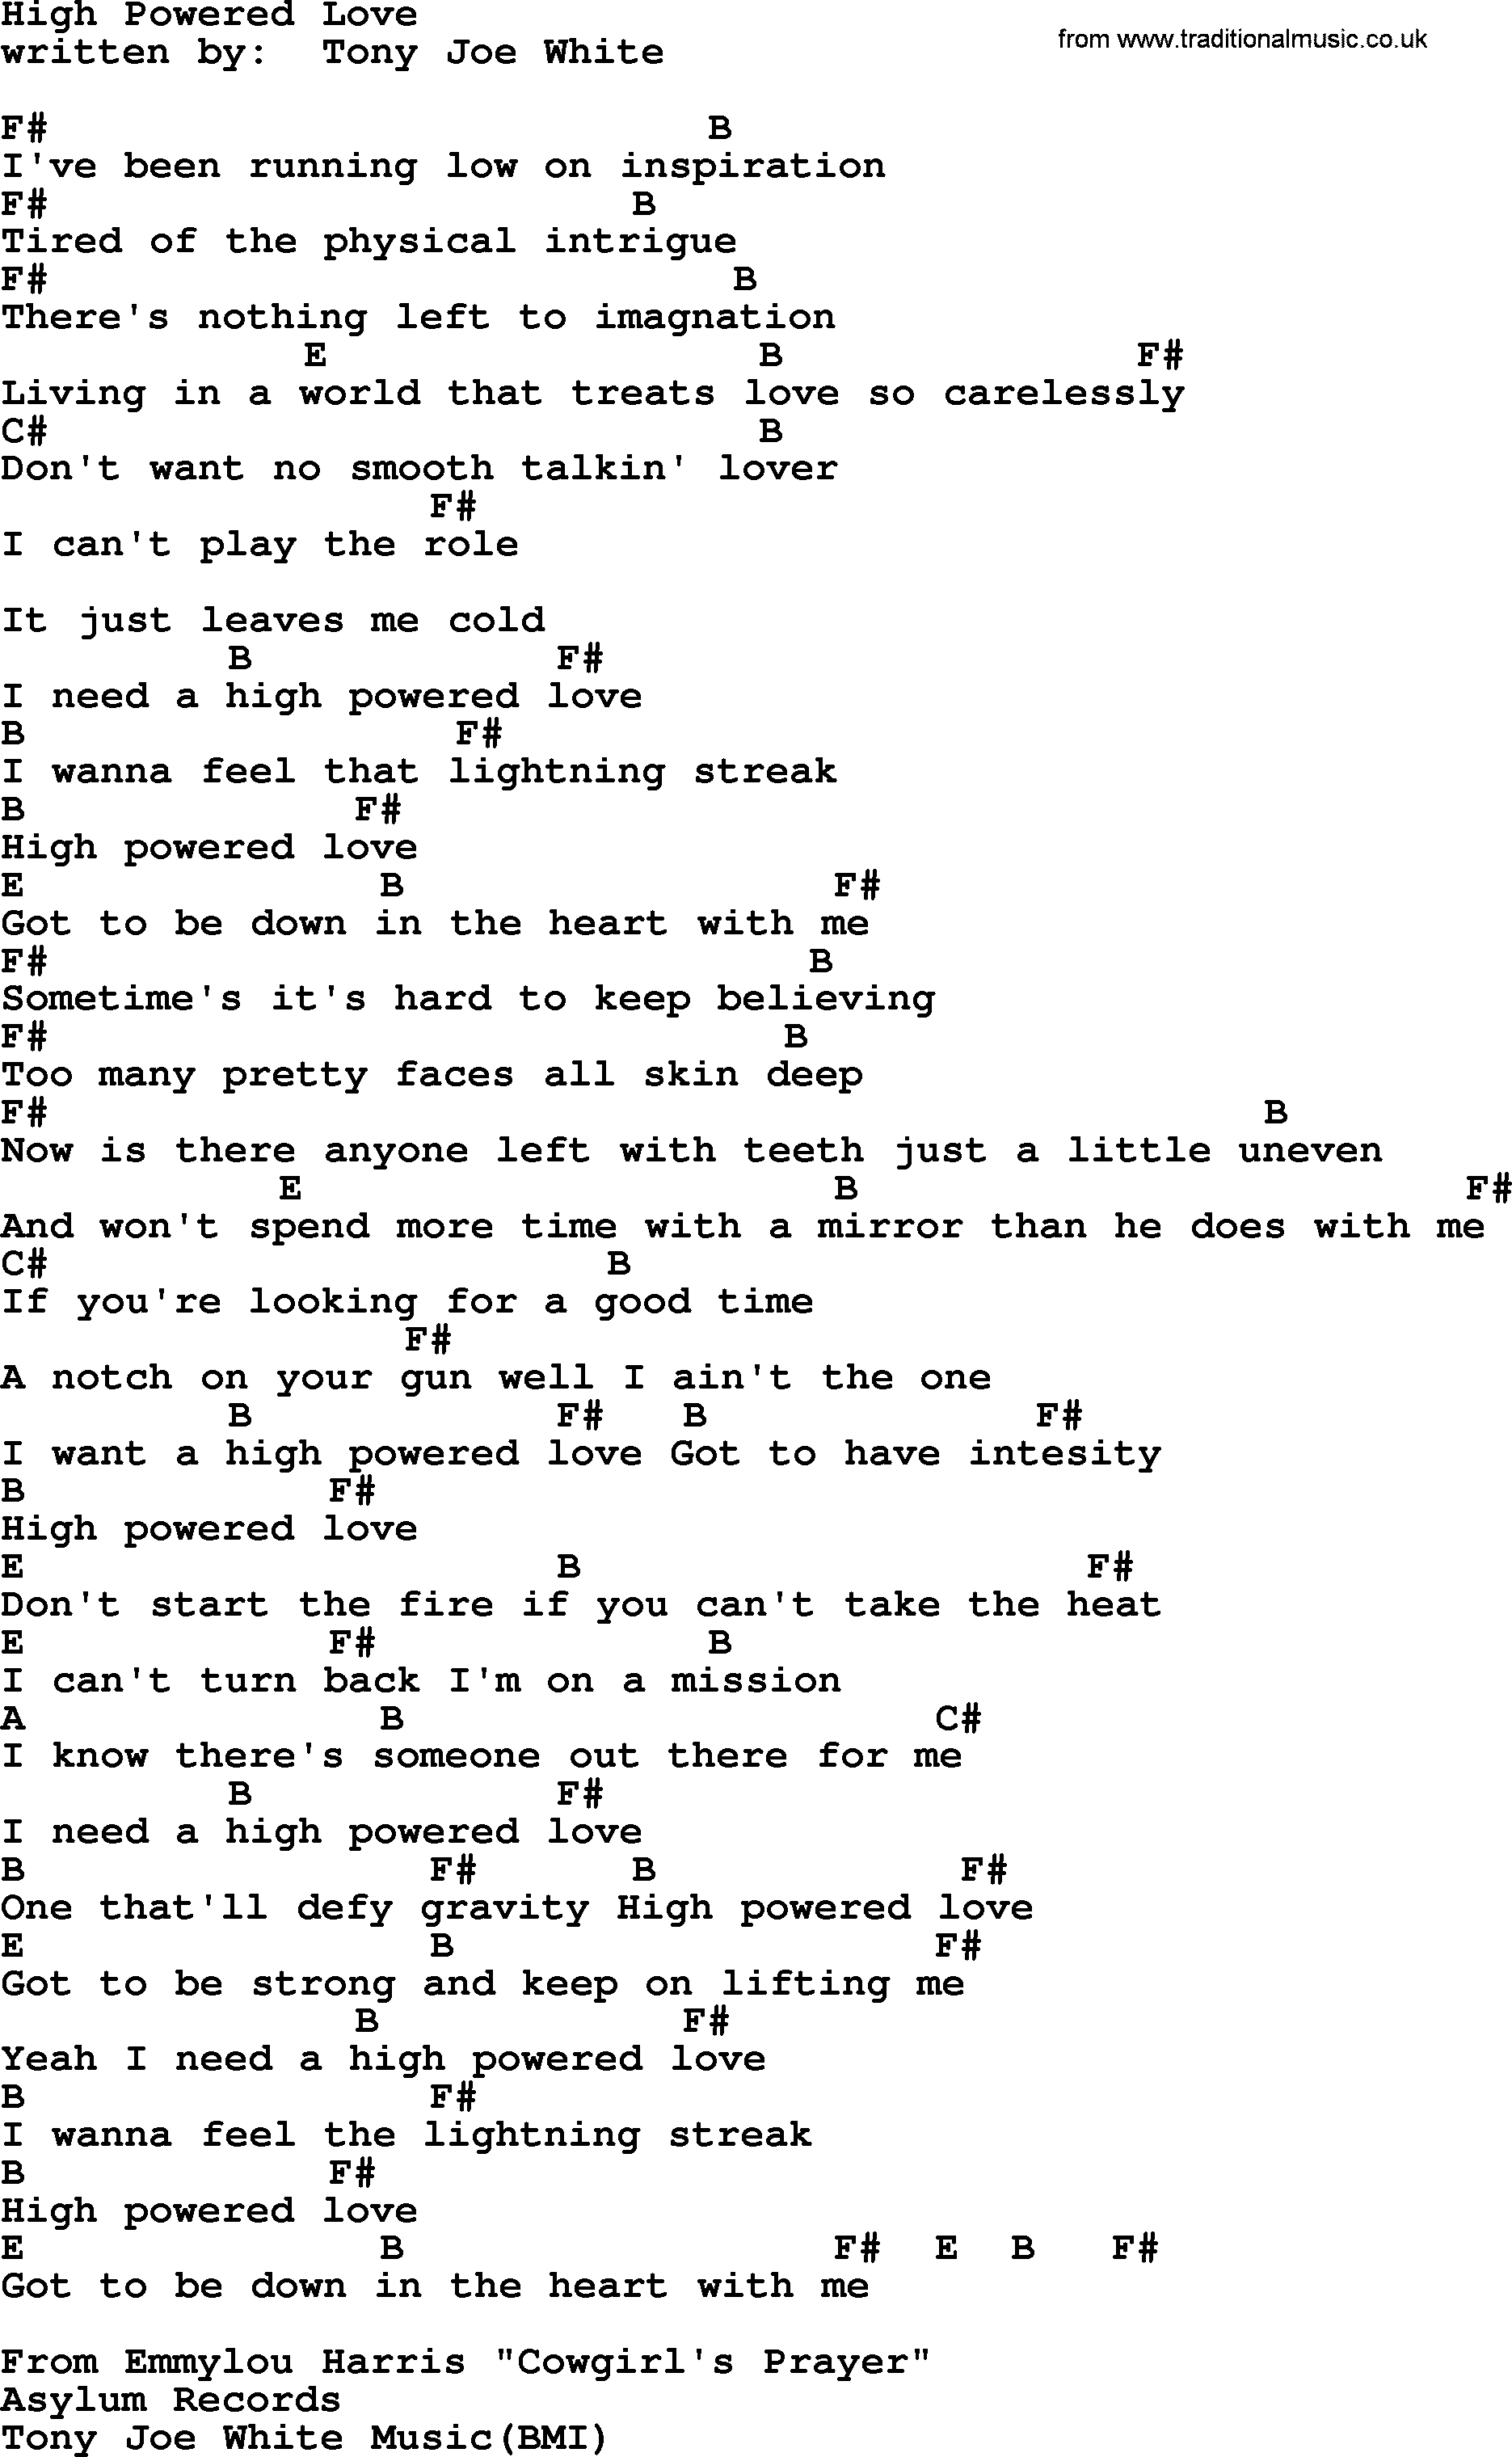 Emmylou Harris song: High Powered Love lyrics and chords